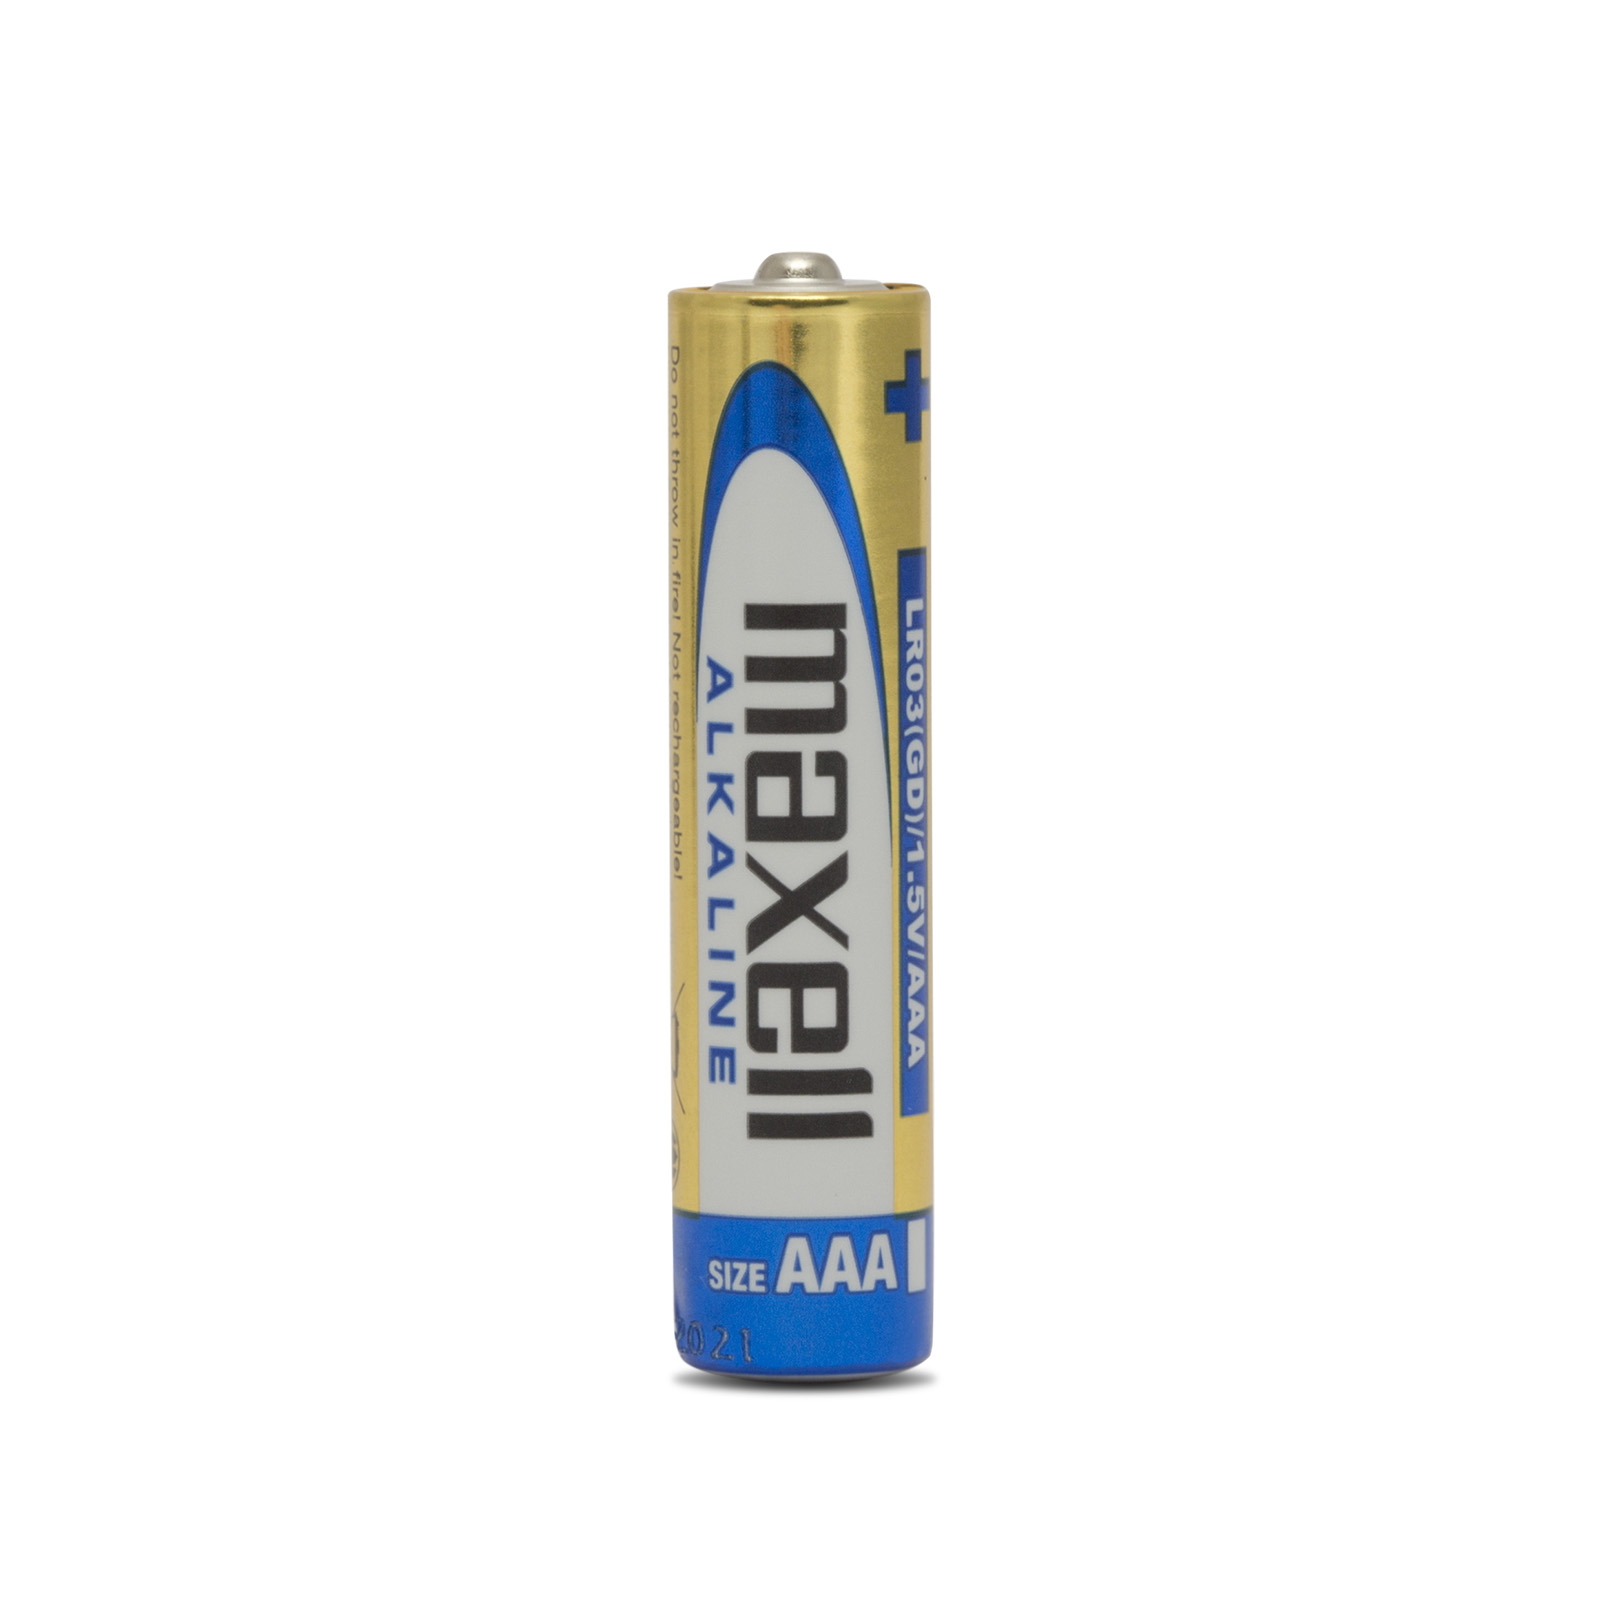 Baterii alcaline AAA-LR03 4+2/blister thumb